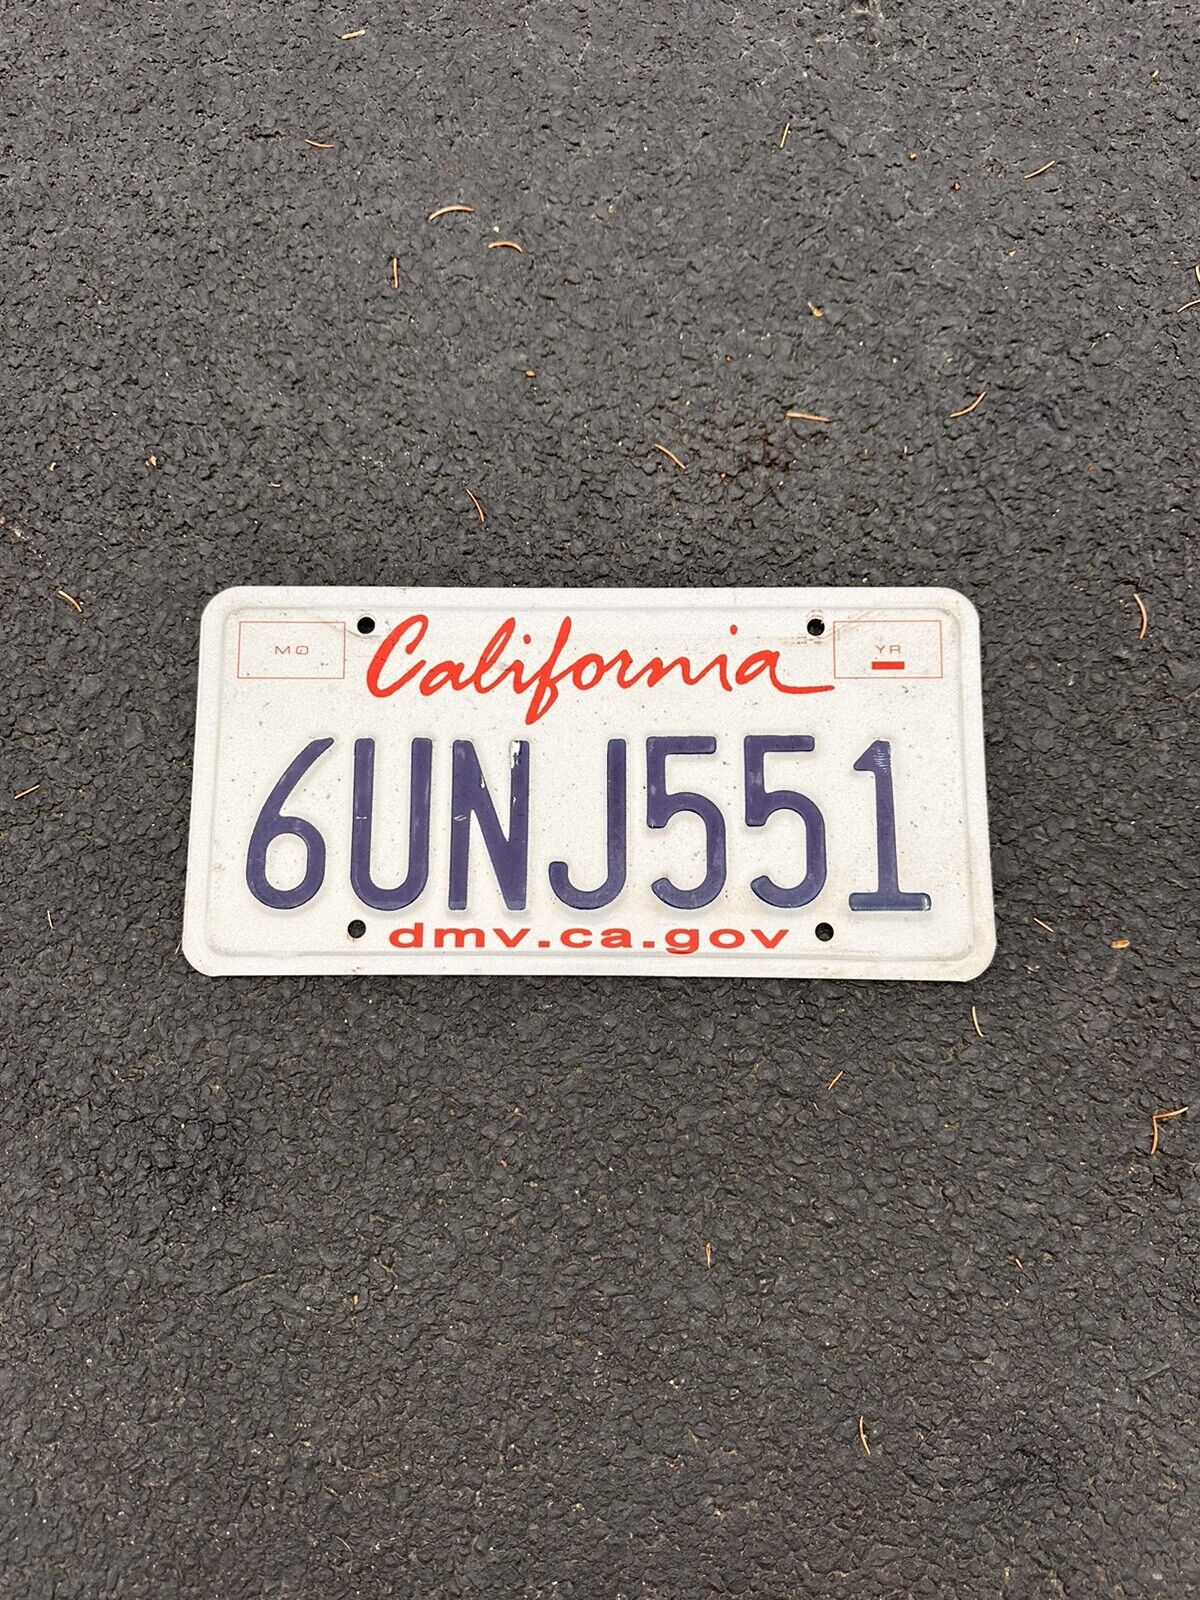 CALIFORNIA passenger License Plate “6UNJ551”